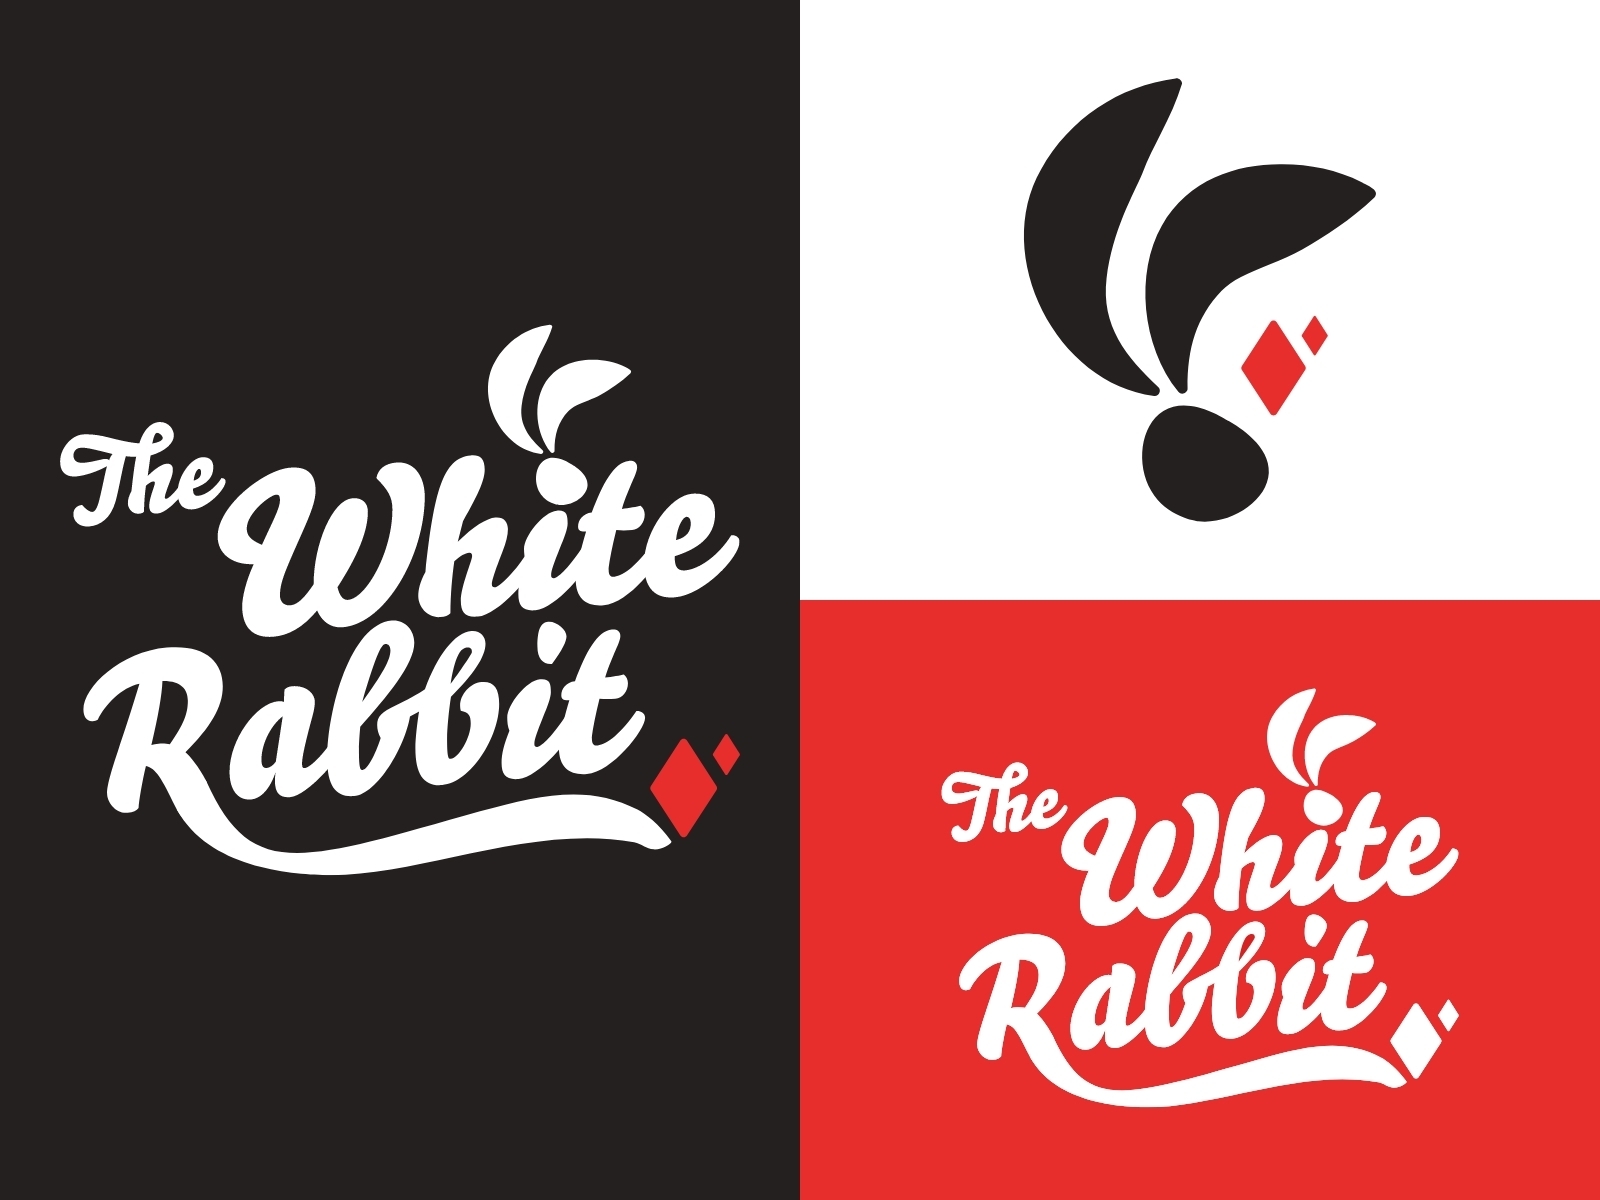 The White Rabbit - pub logo by Klaudia Sagan on Dribbble